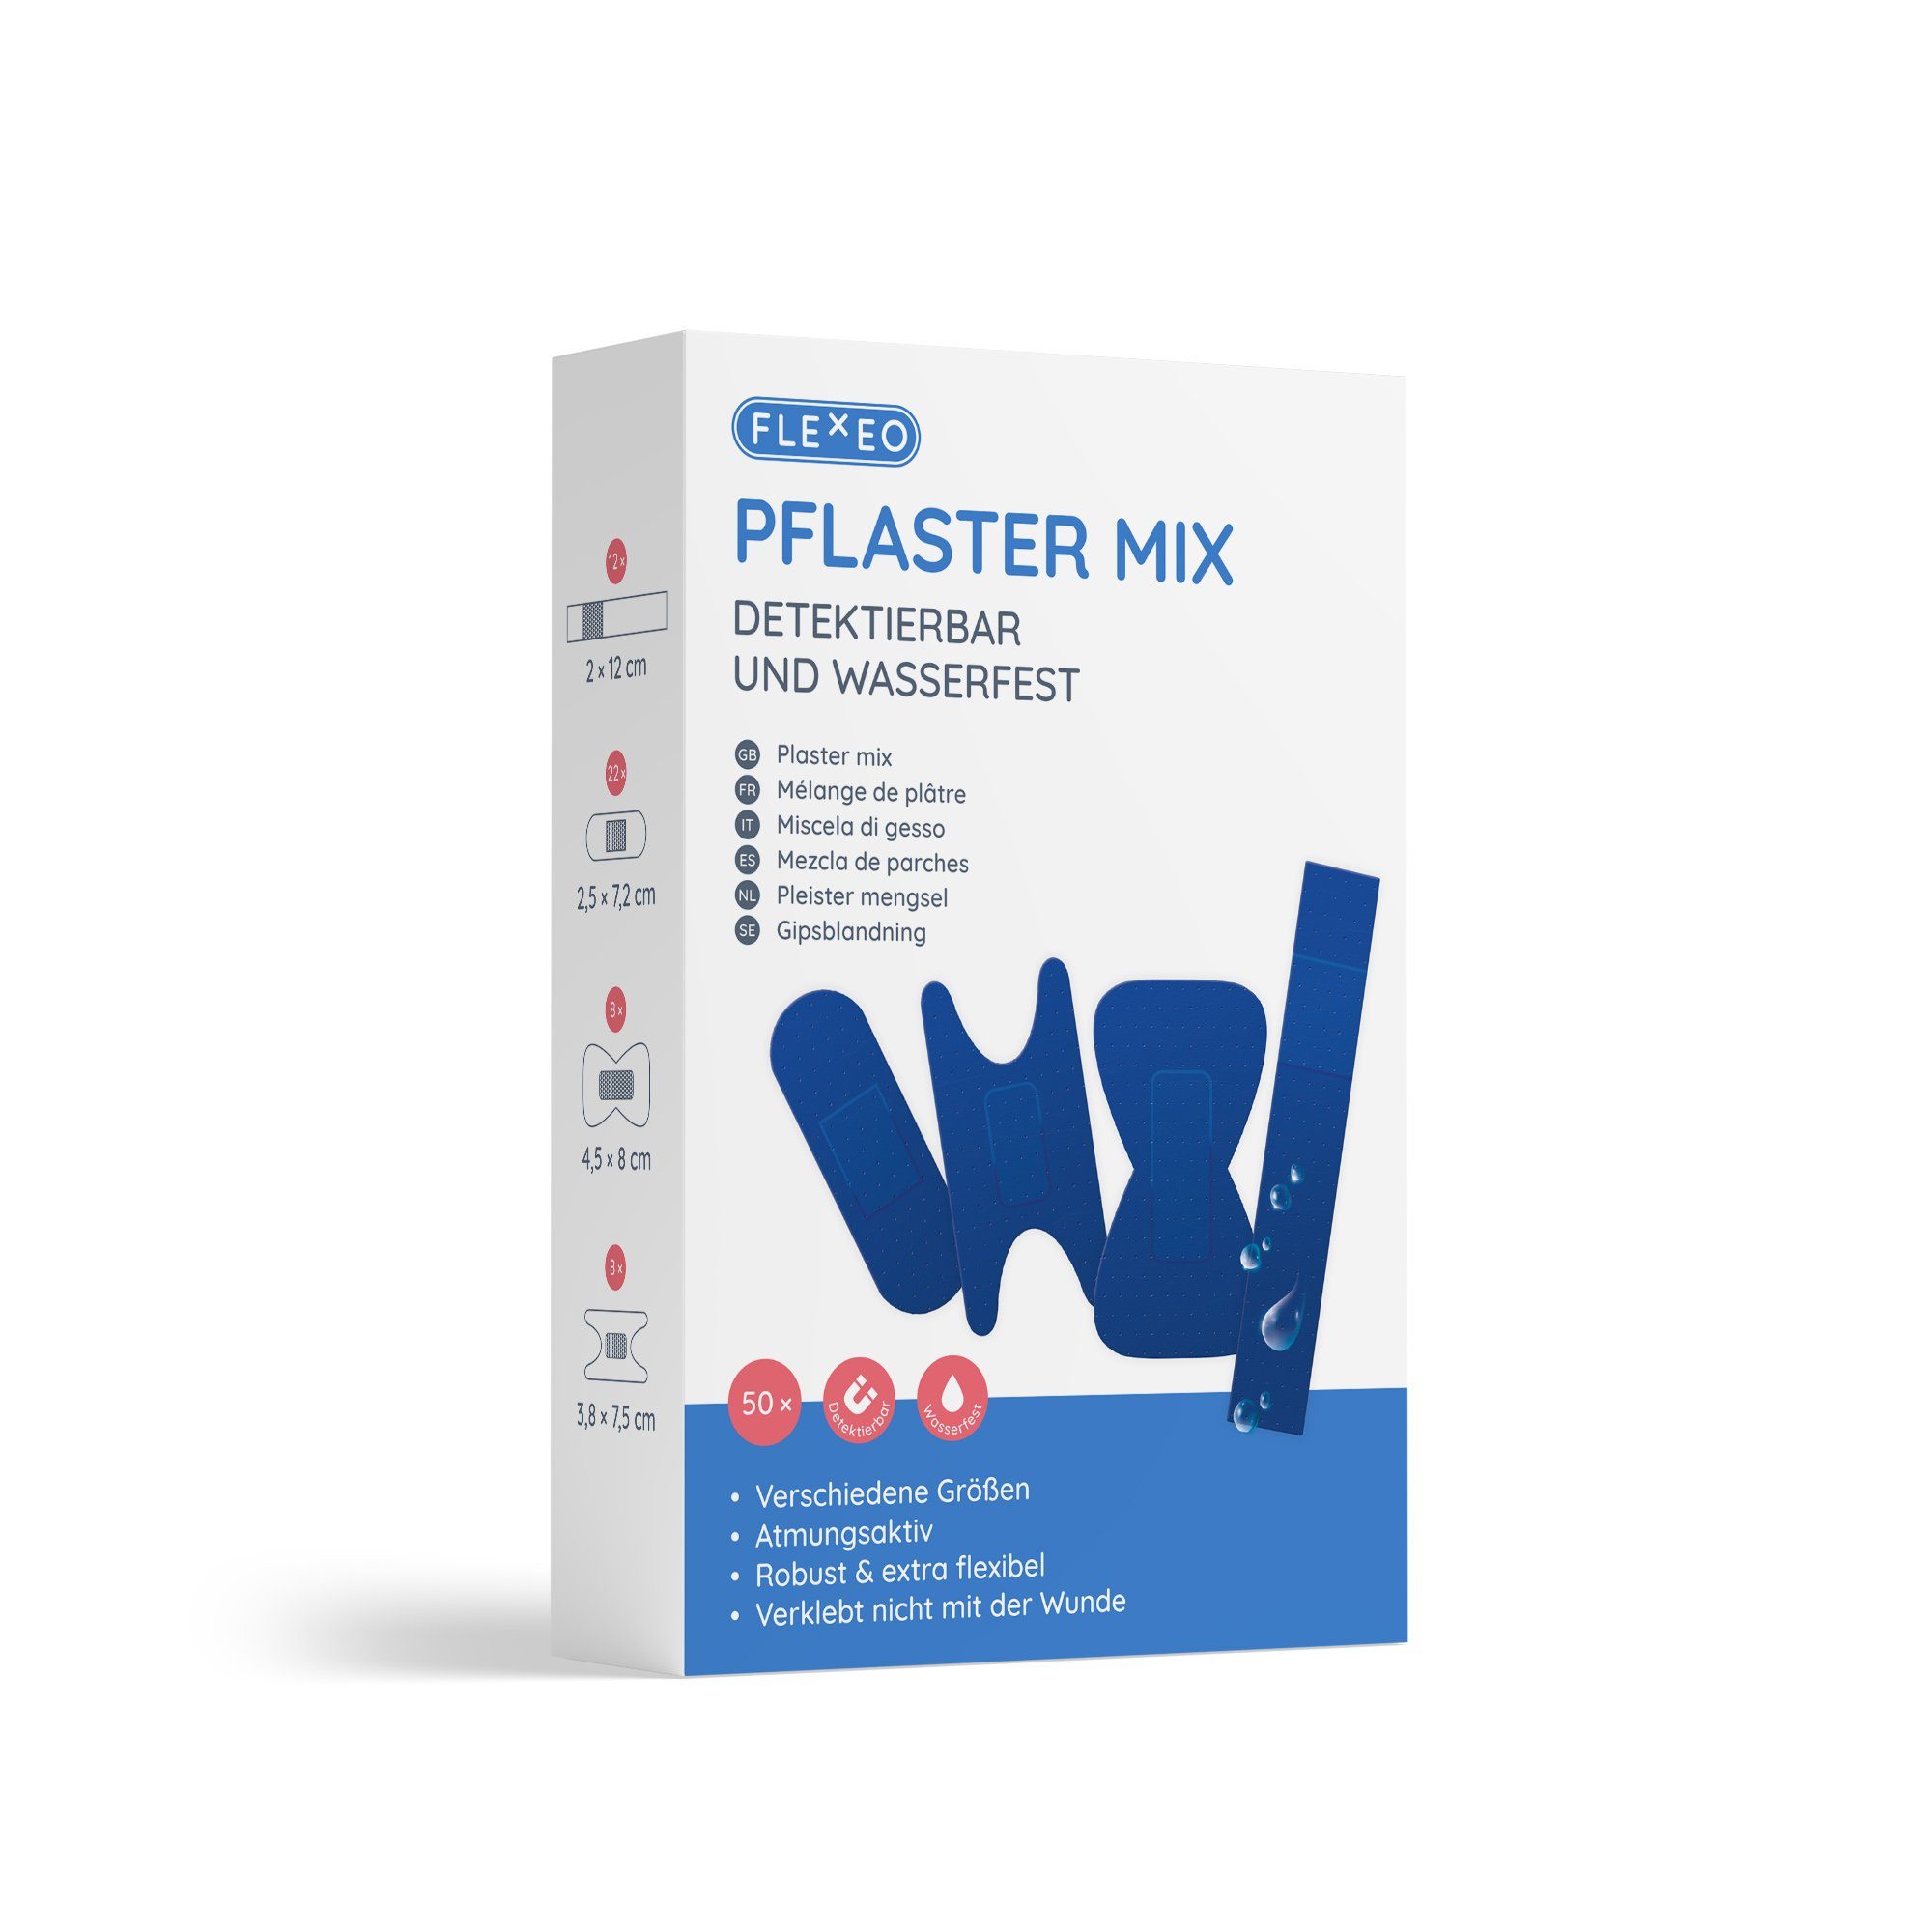 FLEXEO Wundpflaster Pflaster Mix (50 St), Pflastersortiment